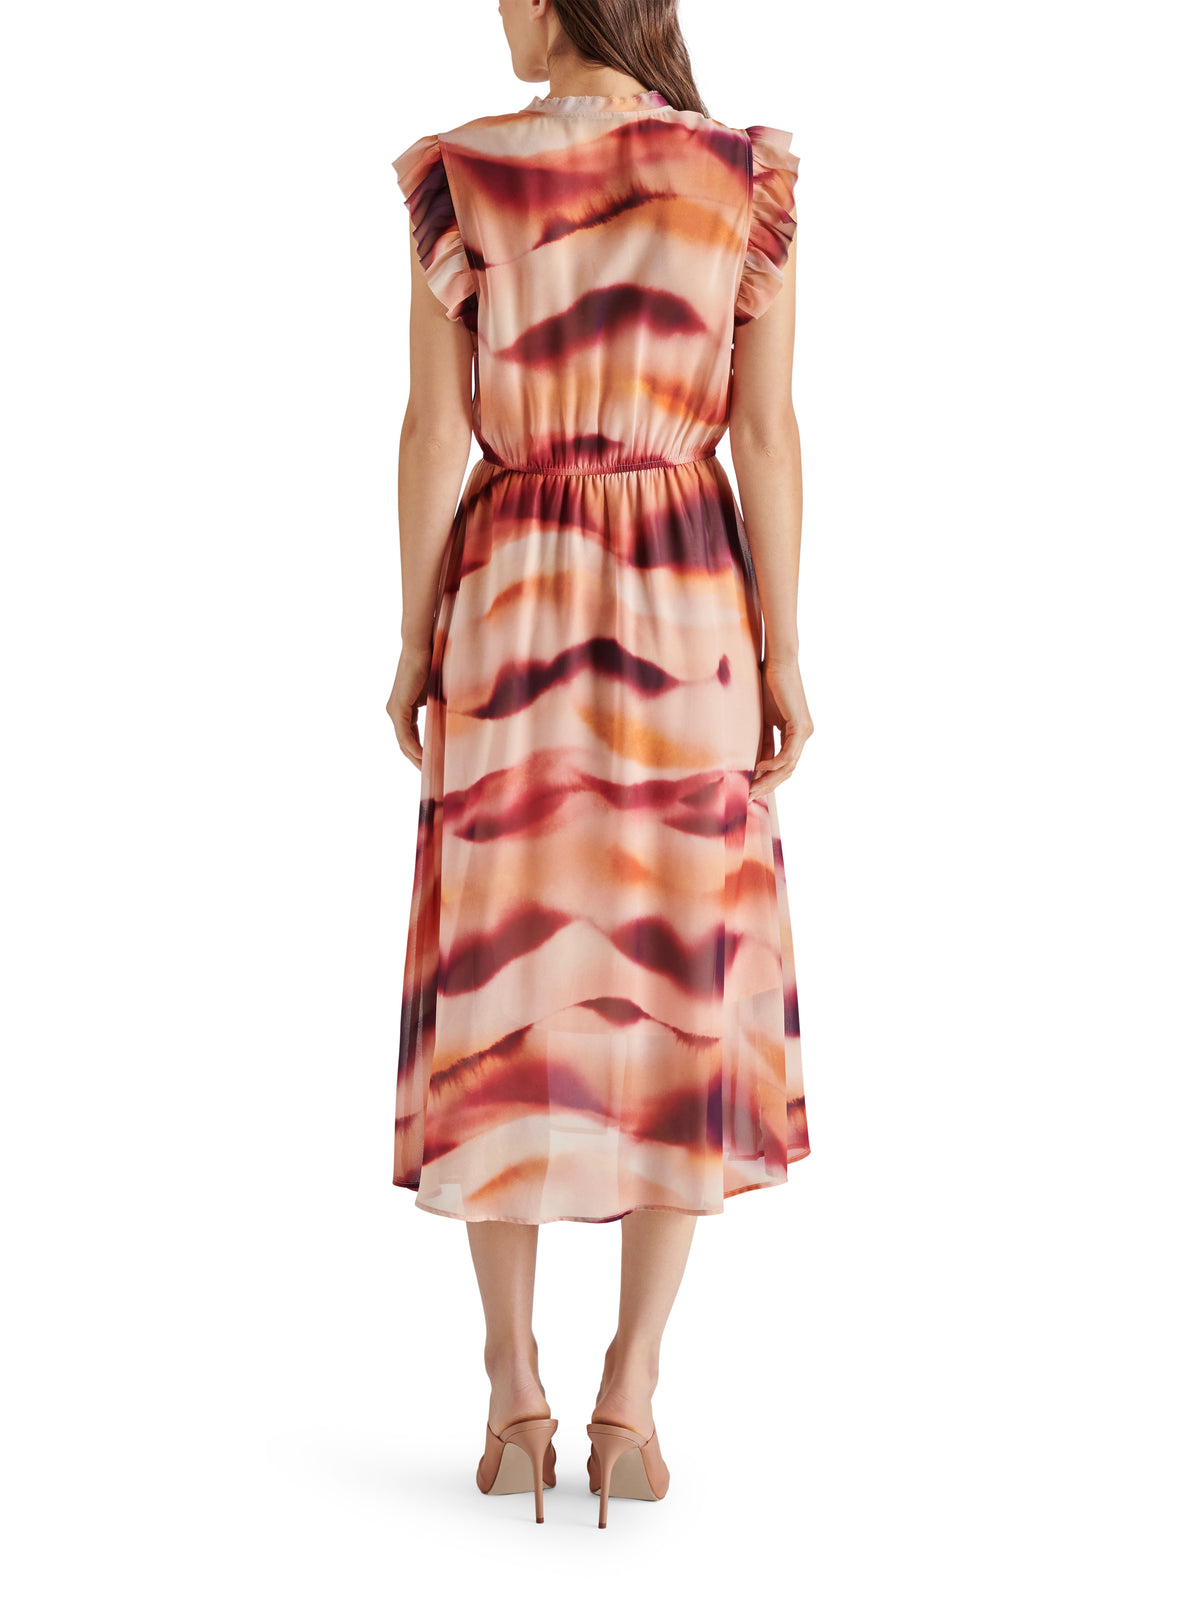 Steve Madden Allegra Abstract Print Dress - Rosewater- back view